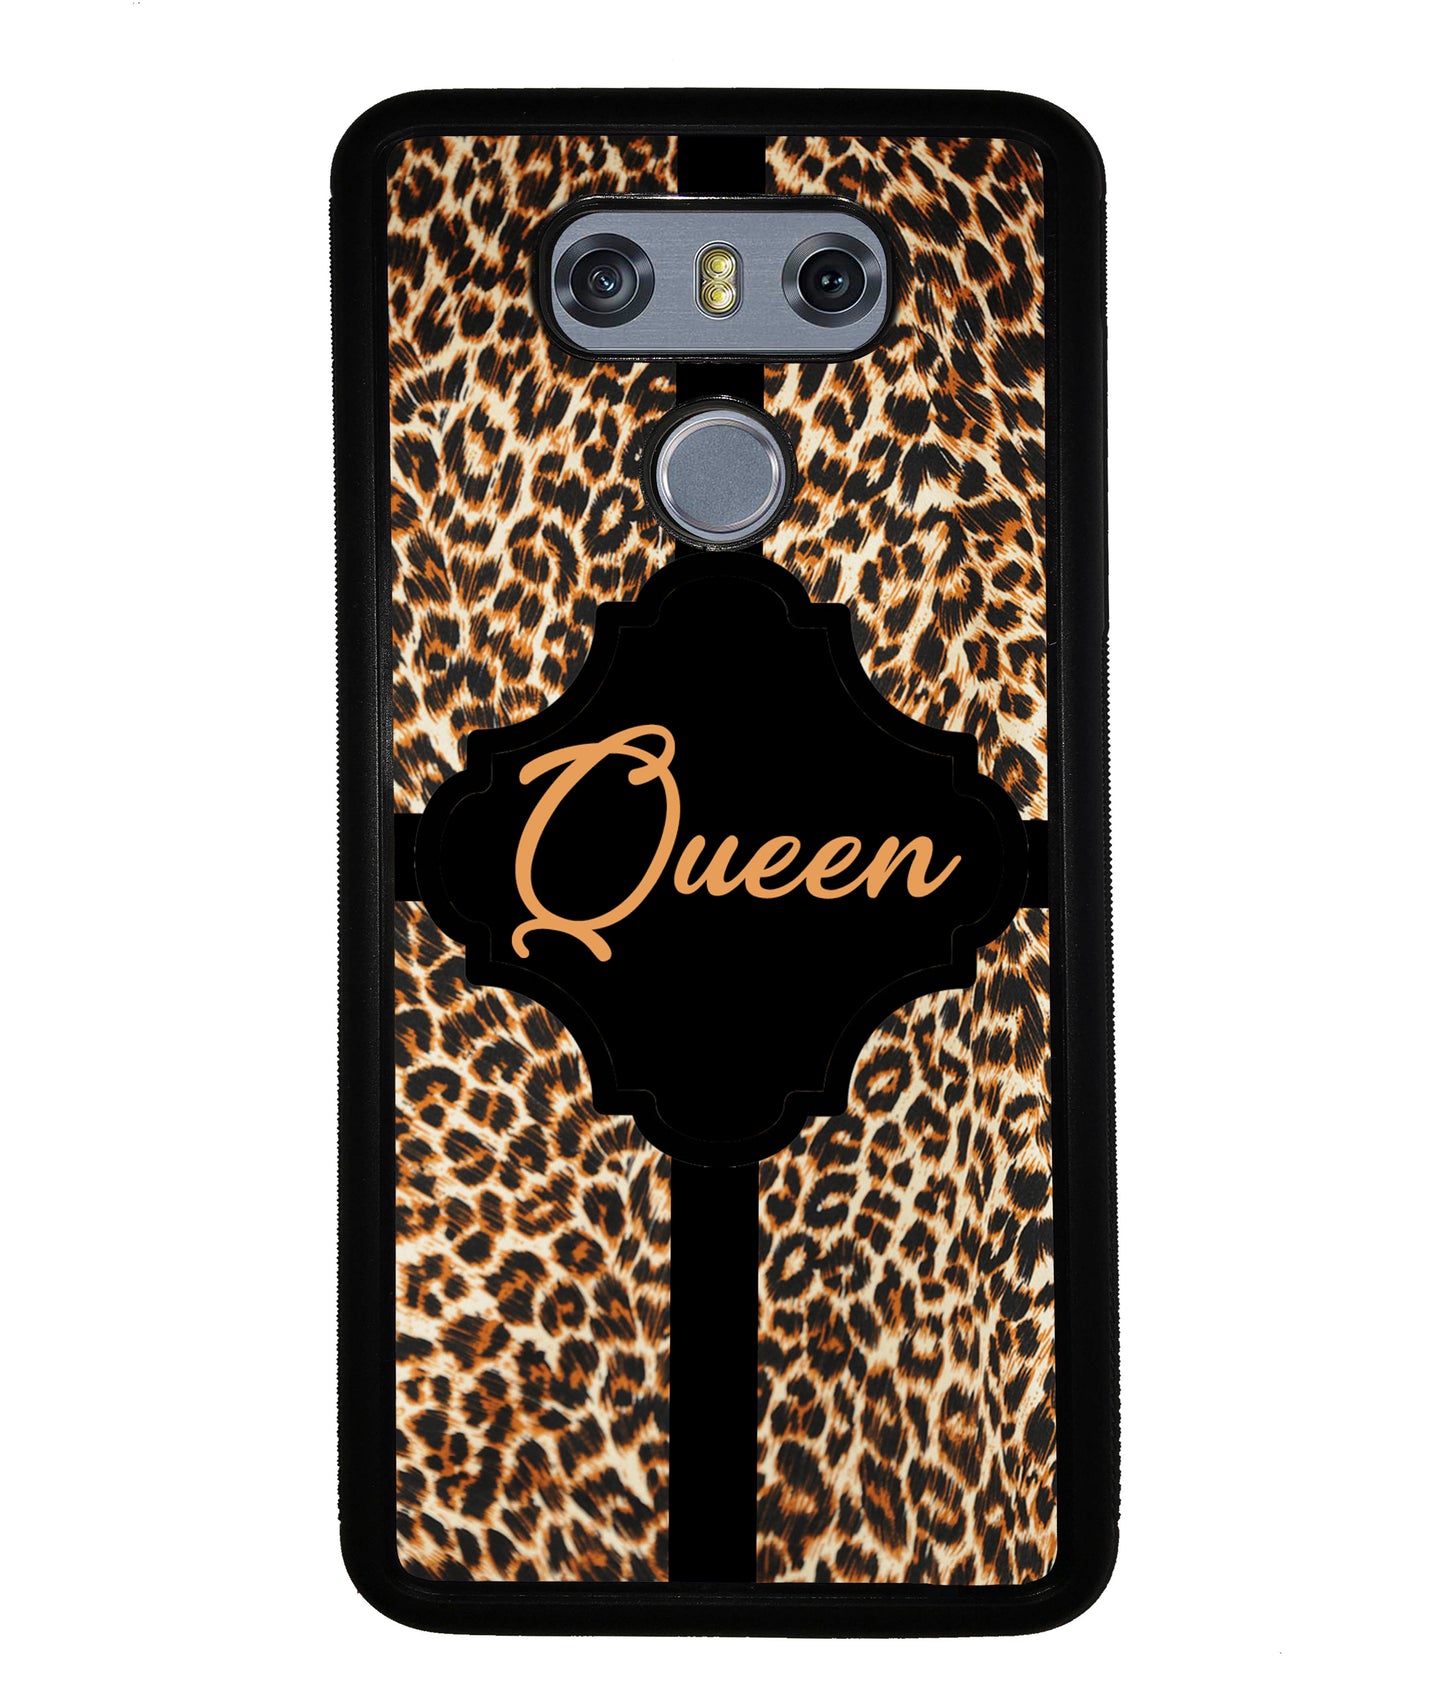 Leopard Animal Skin Personalized | LG Phone Case